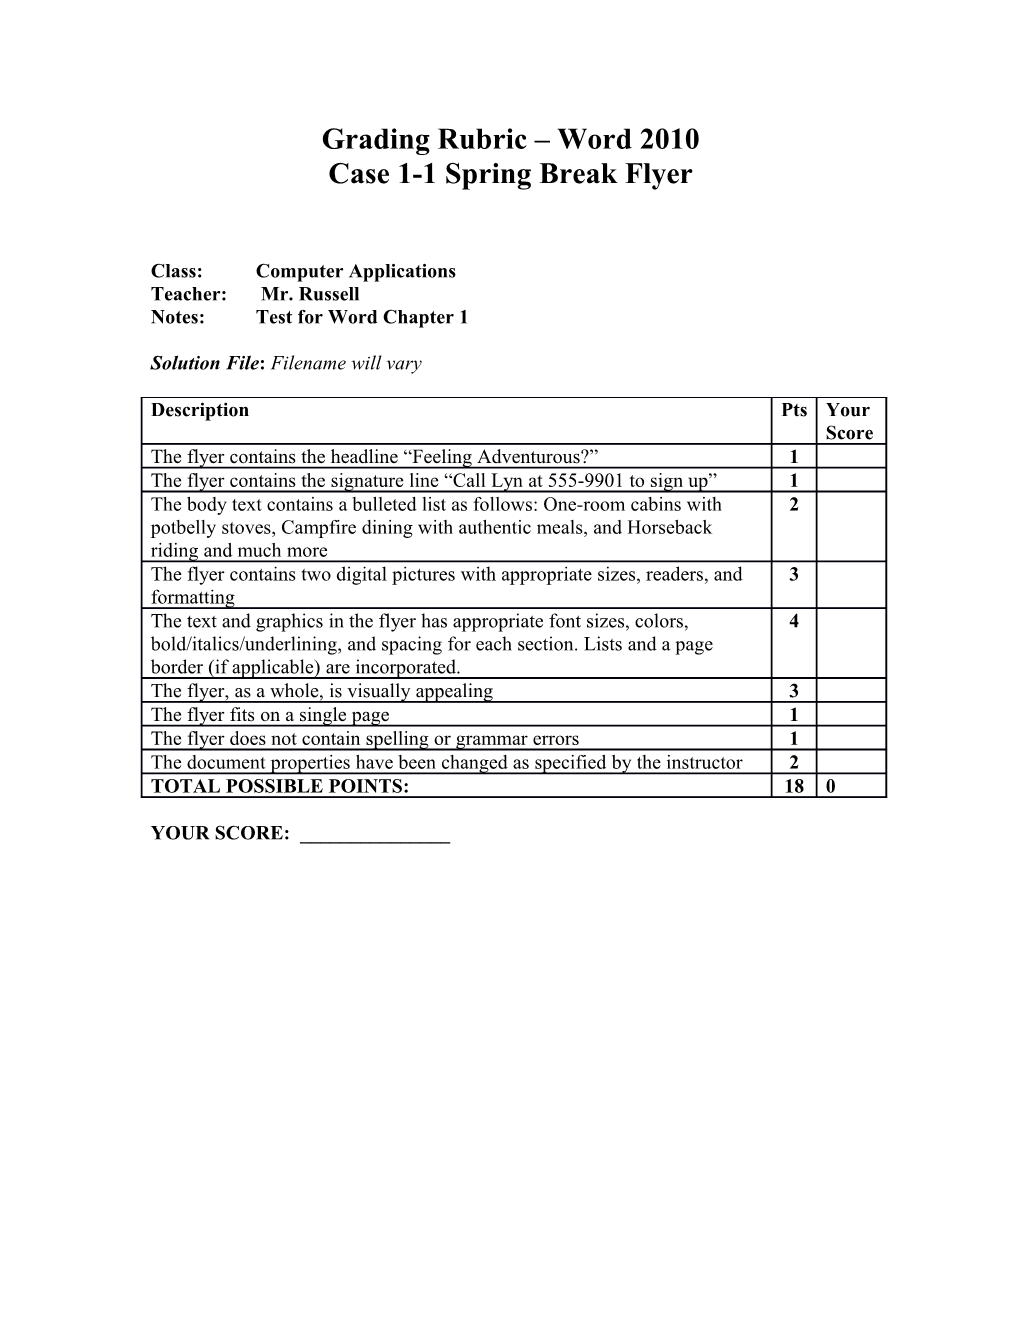 Case 1-1 Spring Break Flyer